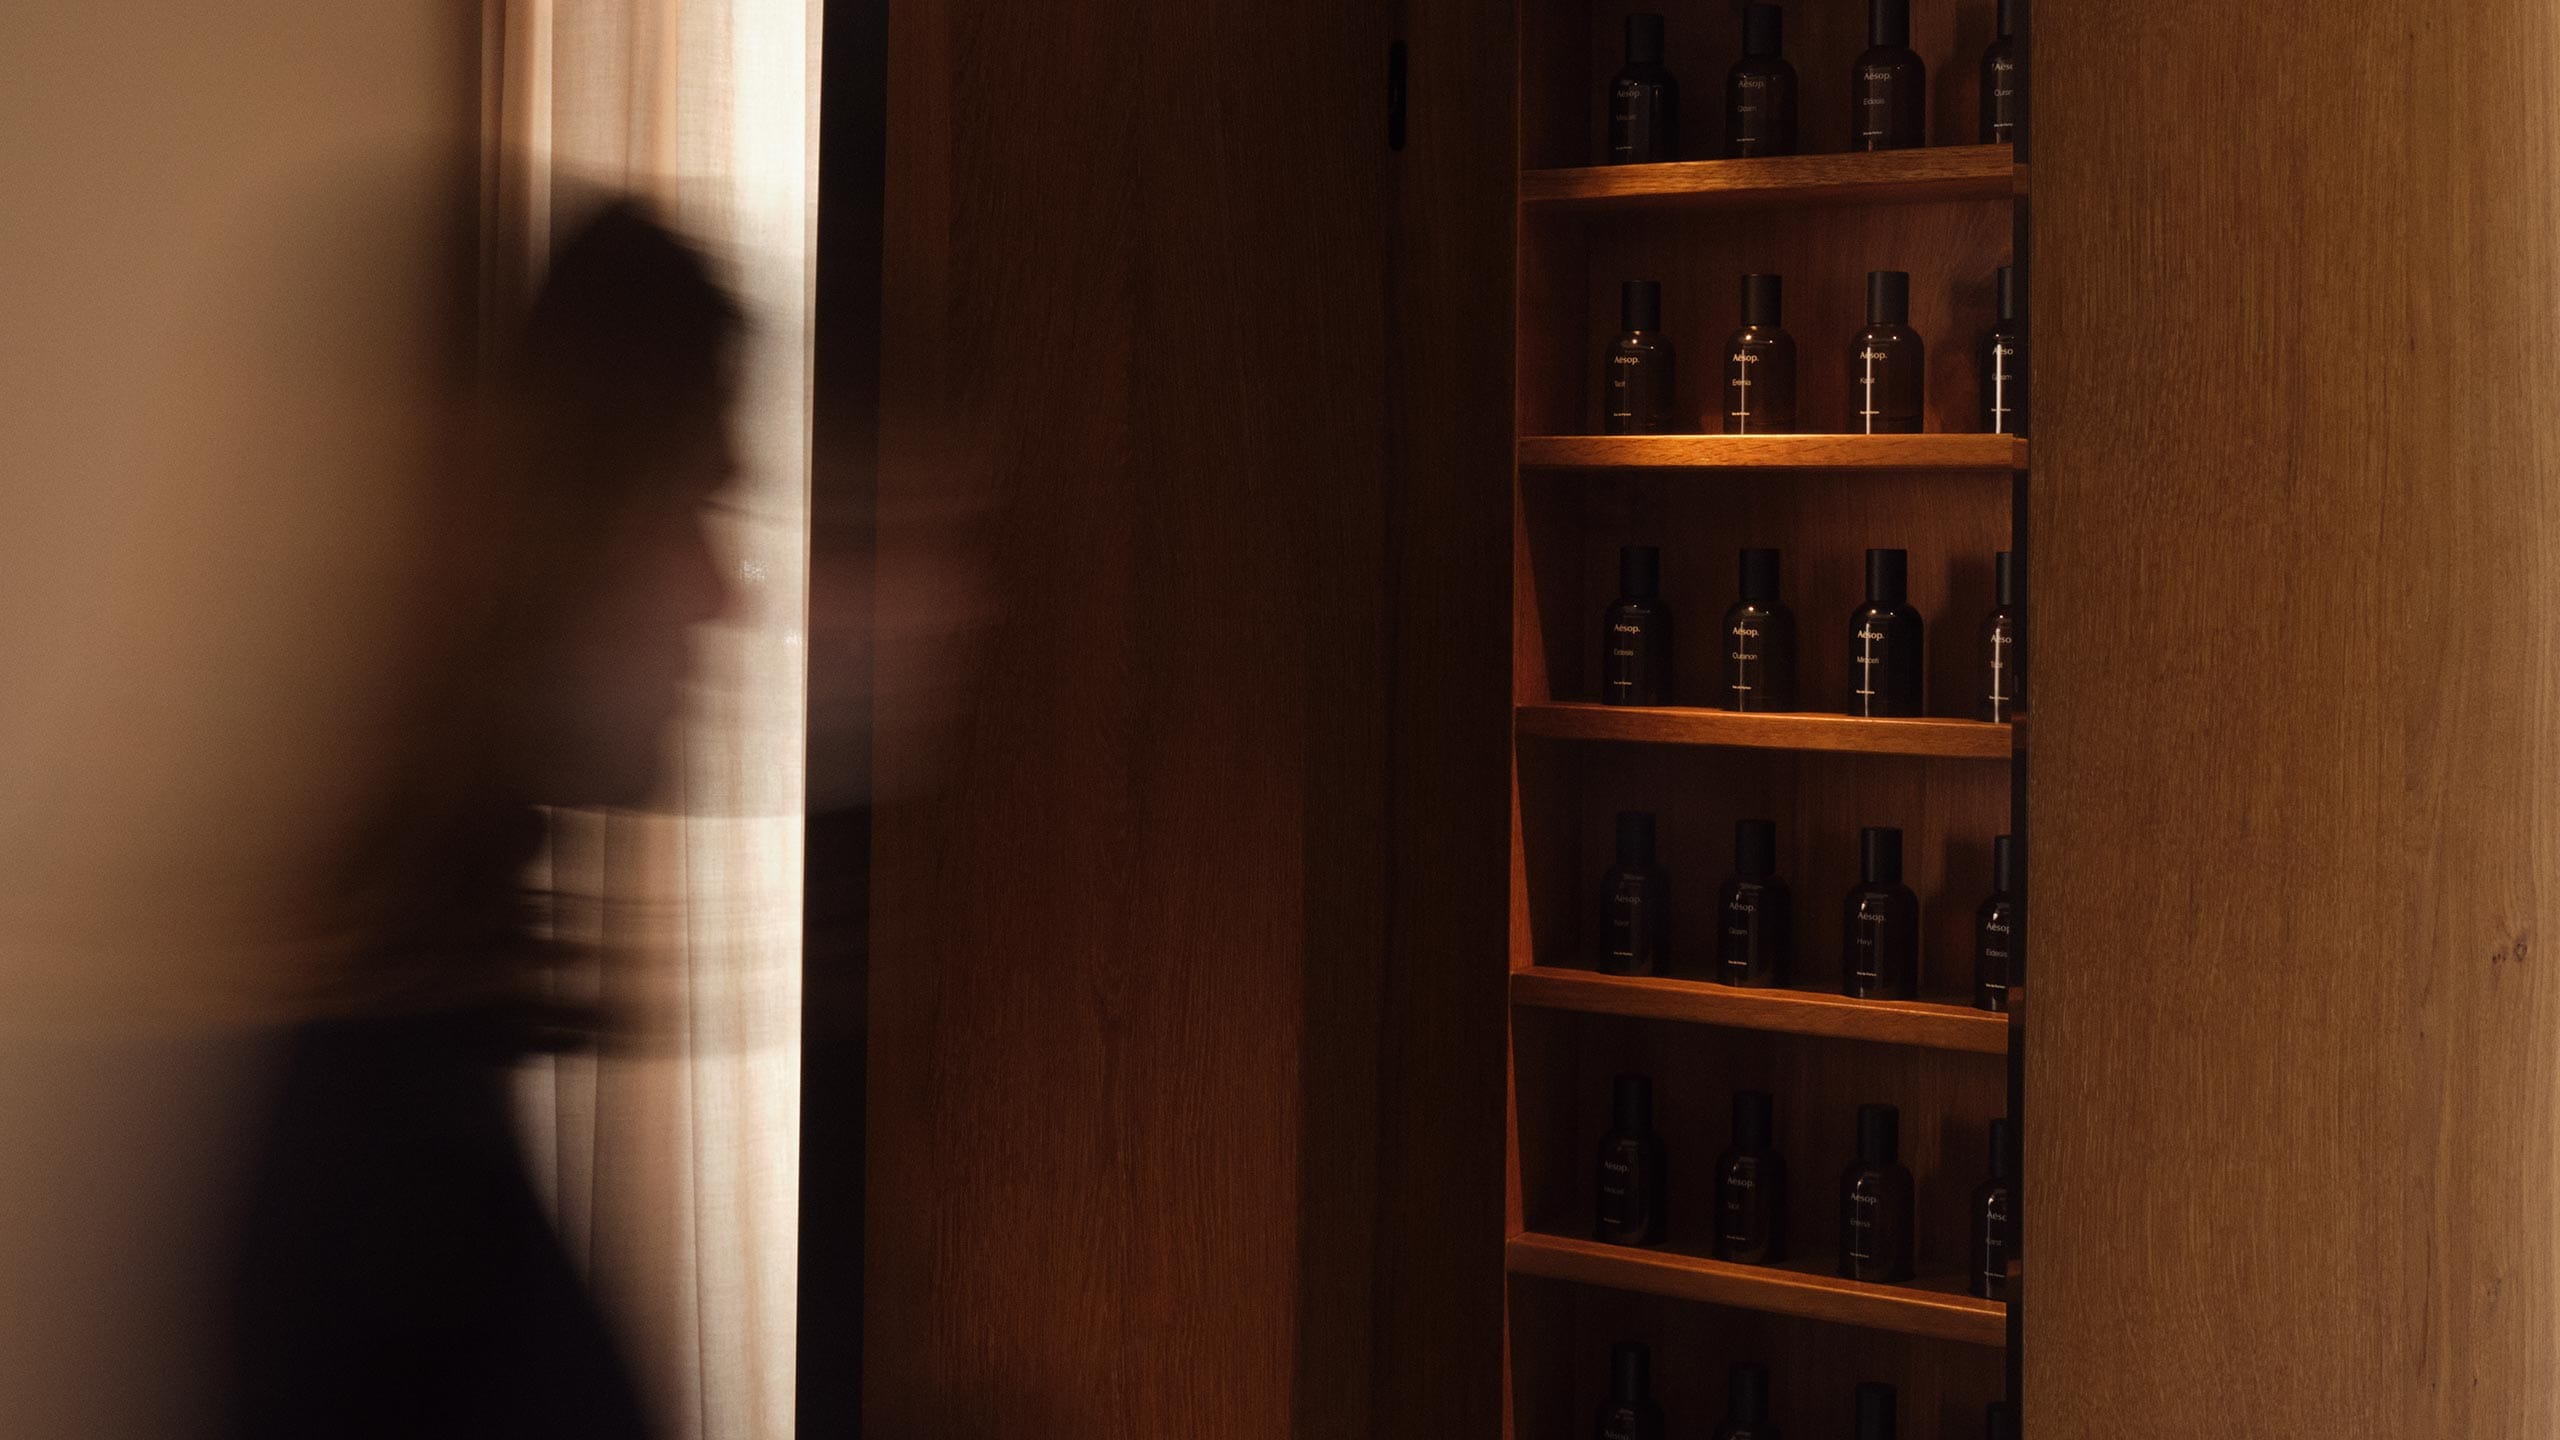 An individual walking past a wooden shelf displaying Aesop fragrances in amber bottles